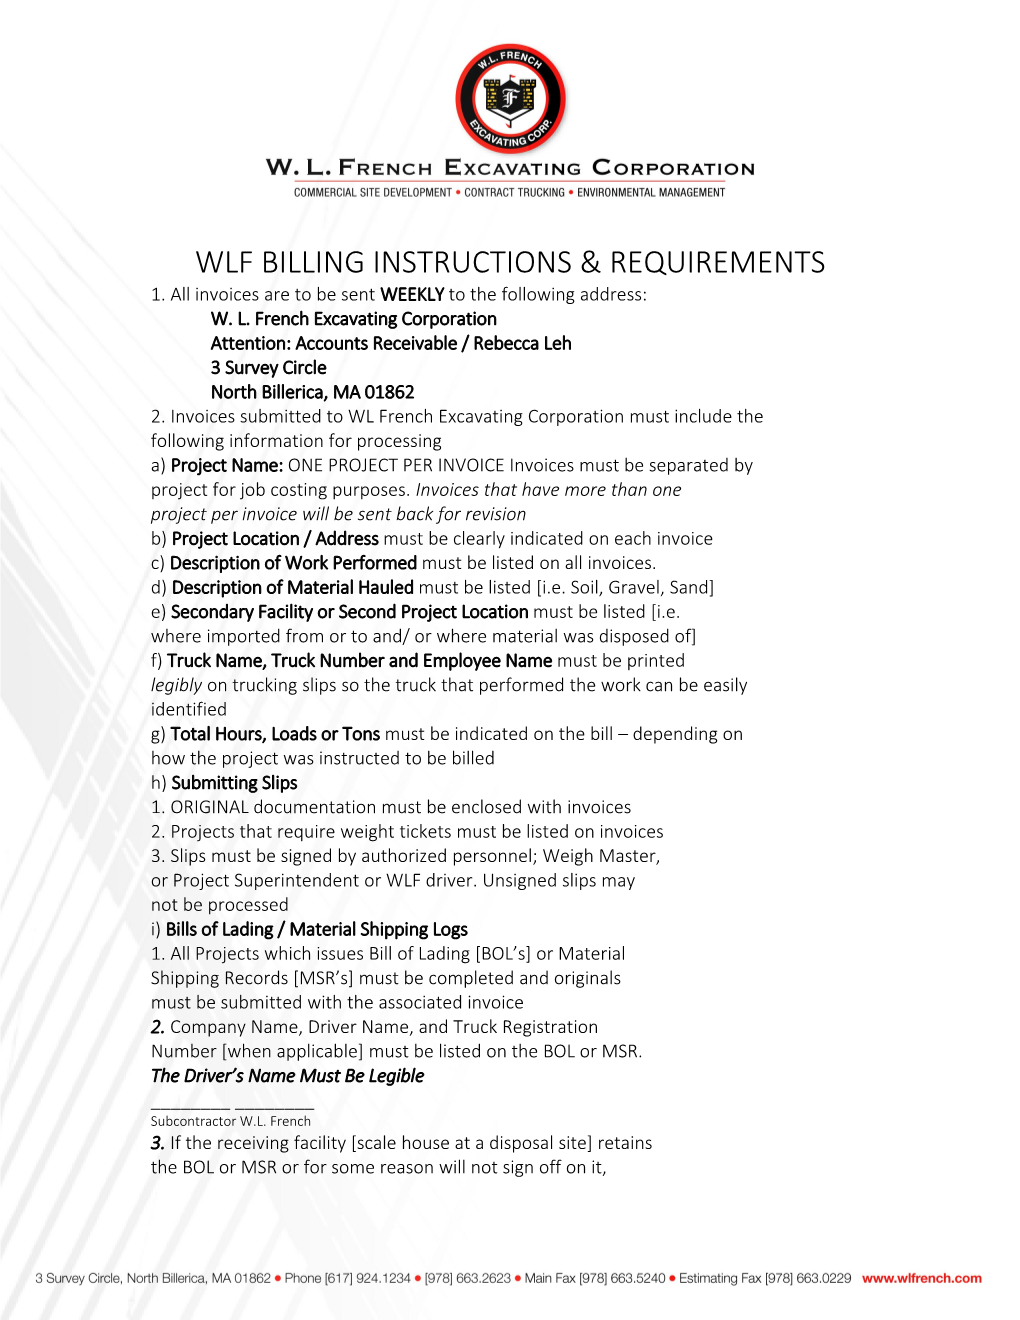 Wlf Billing Instructions & Requirements